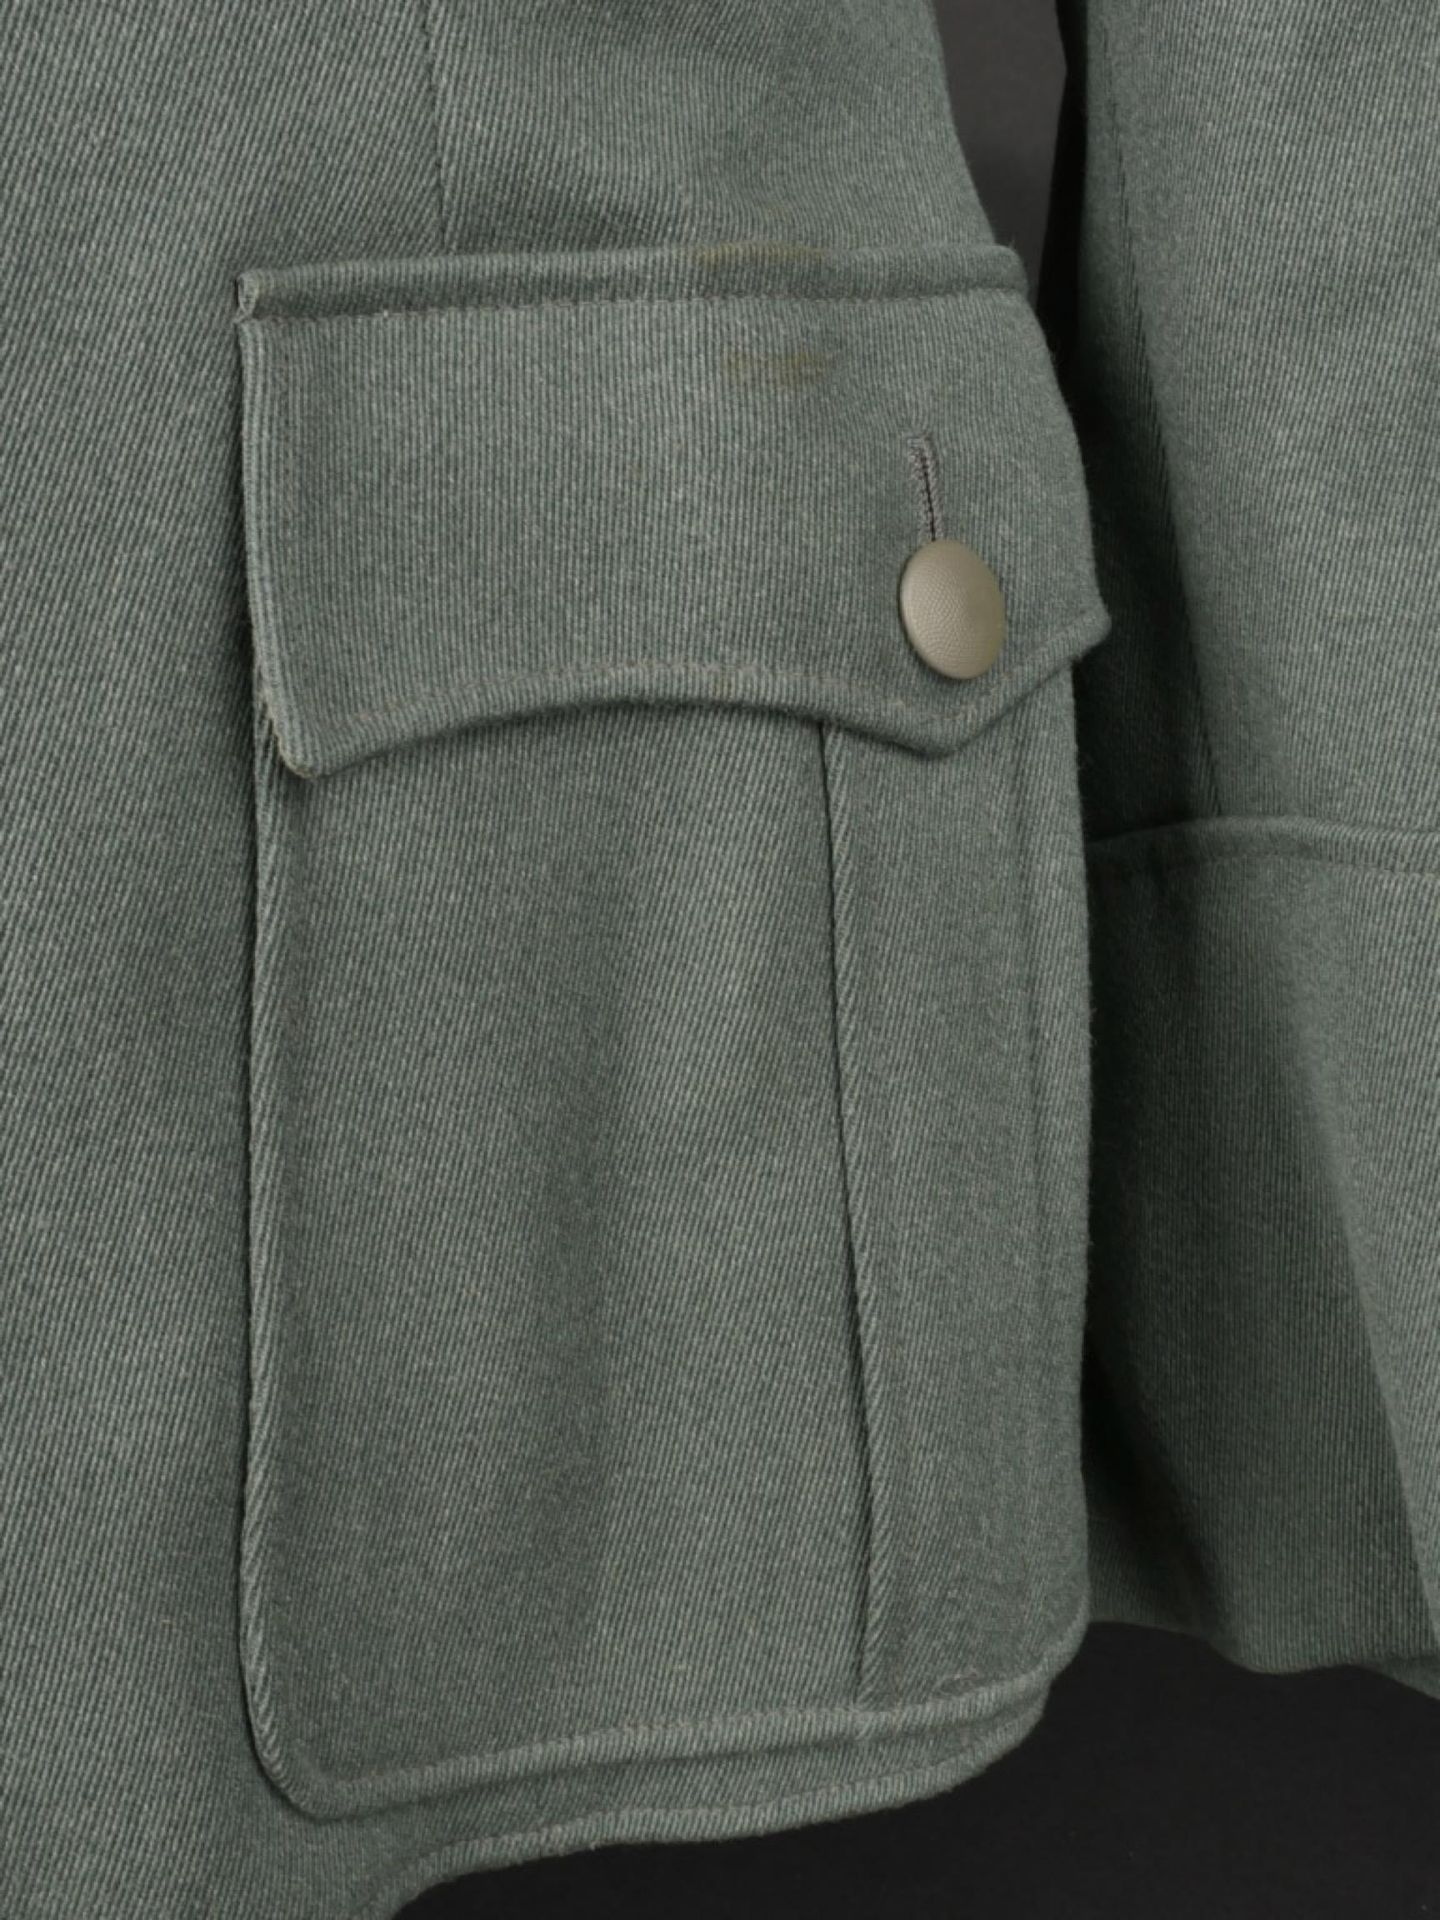 Vareuse officier Heer. Heer officer jacket.  - Image 8 of 10